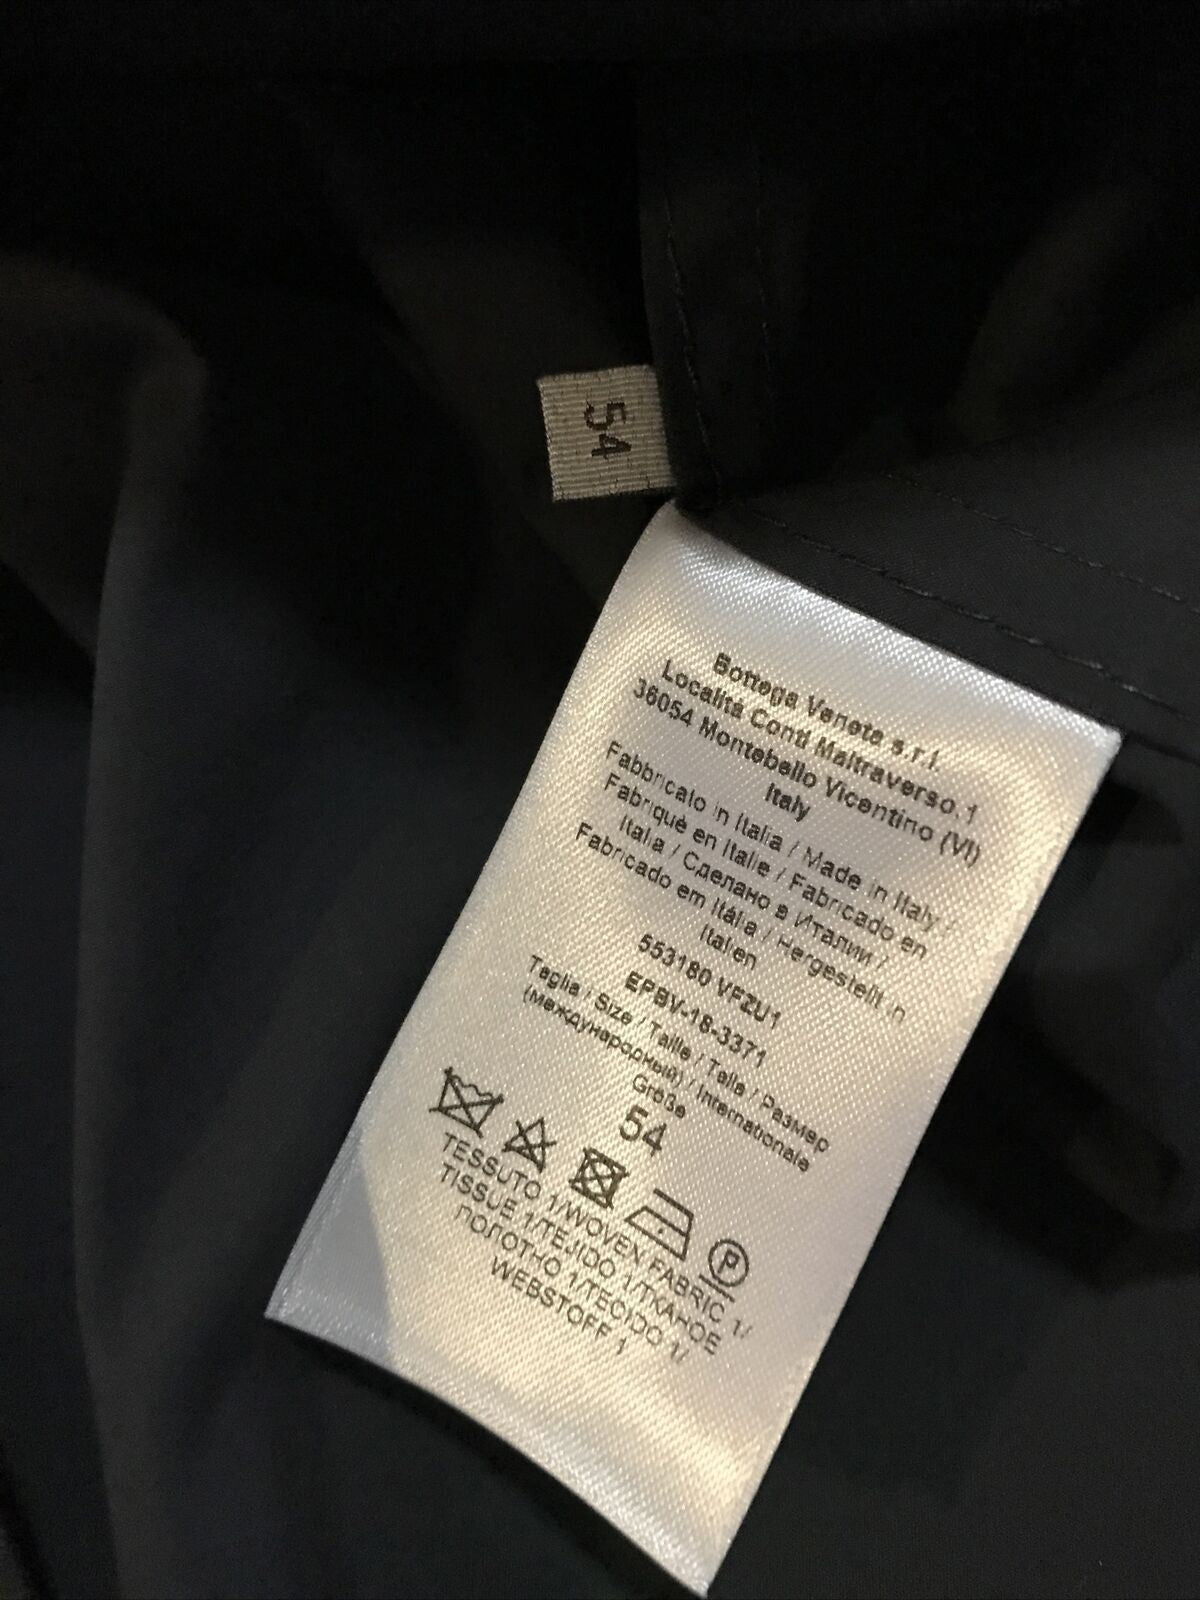 New $1300 Bottega Veneta Men’s Jacket Blazer Black 44 US ( 54 Eu ) Italy